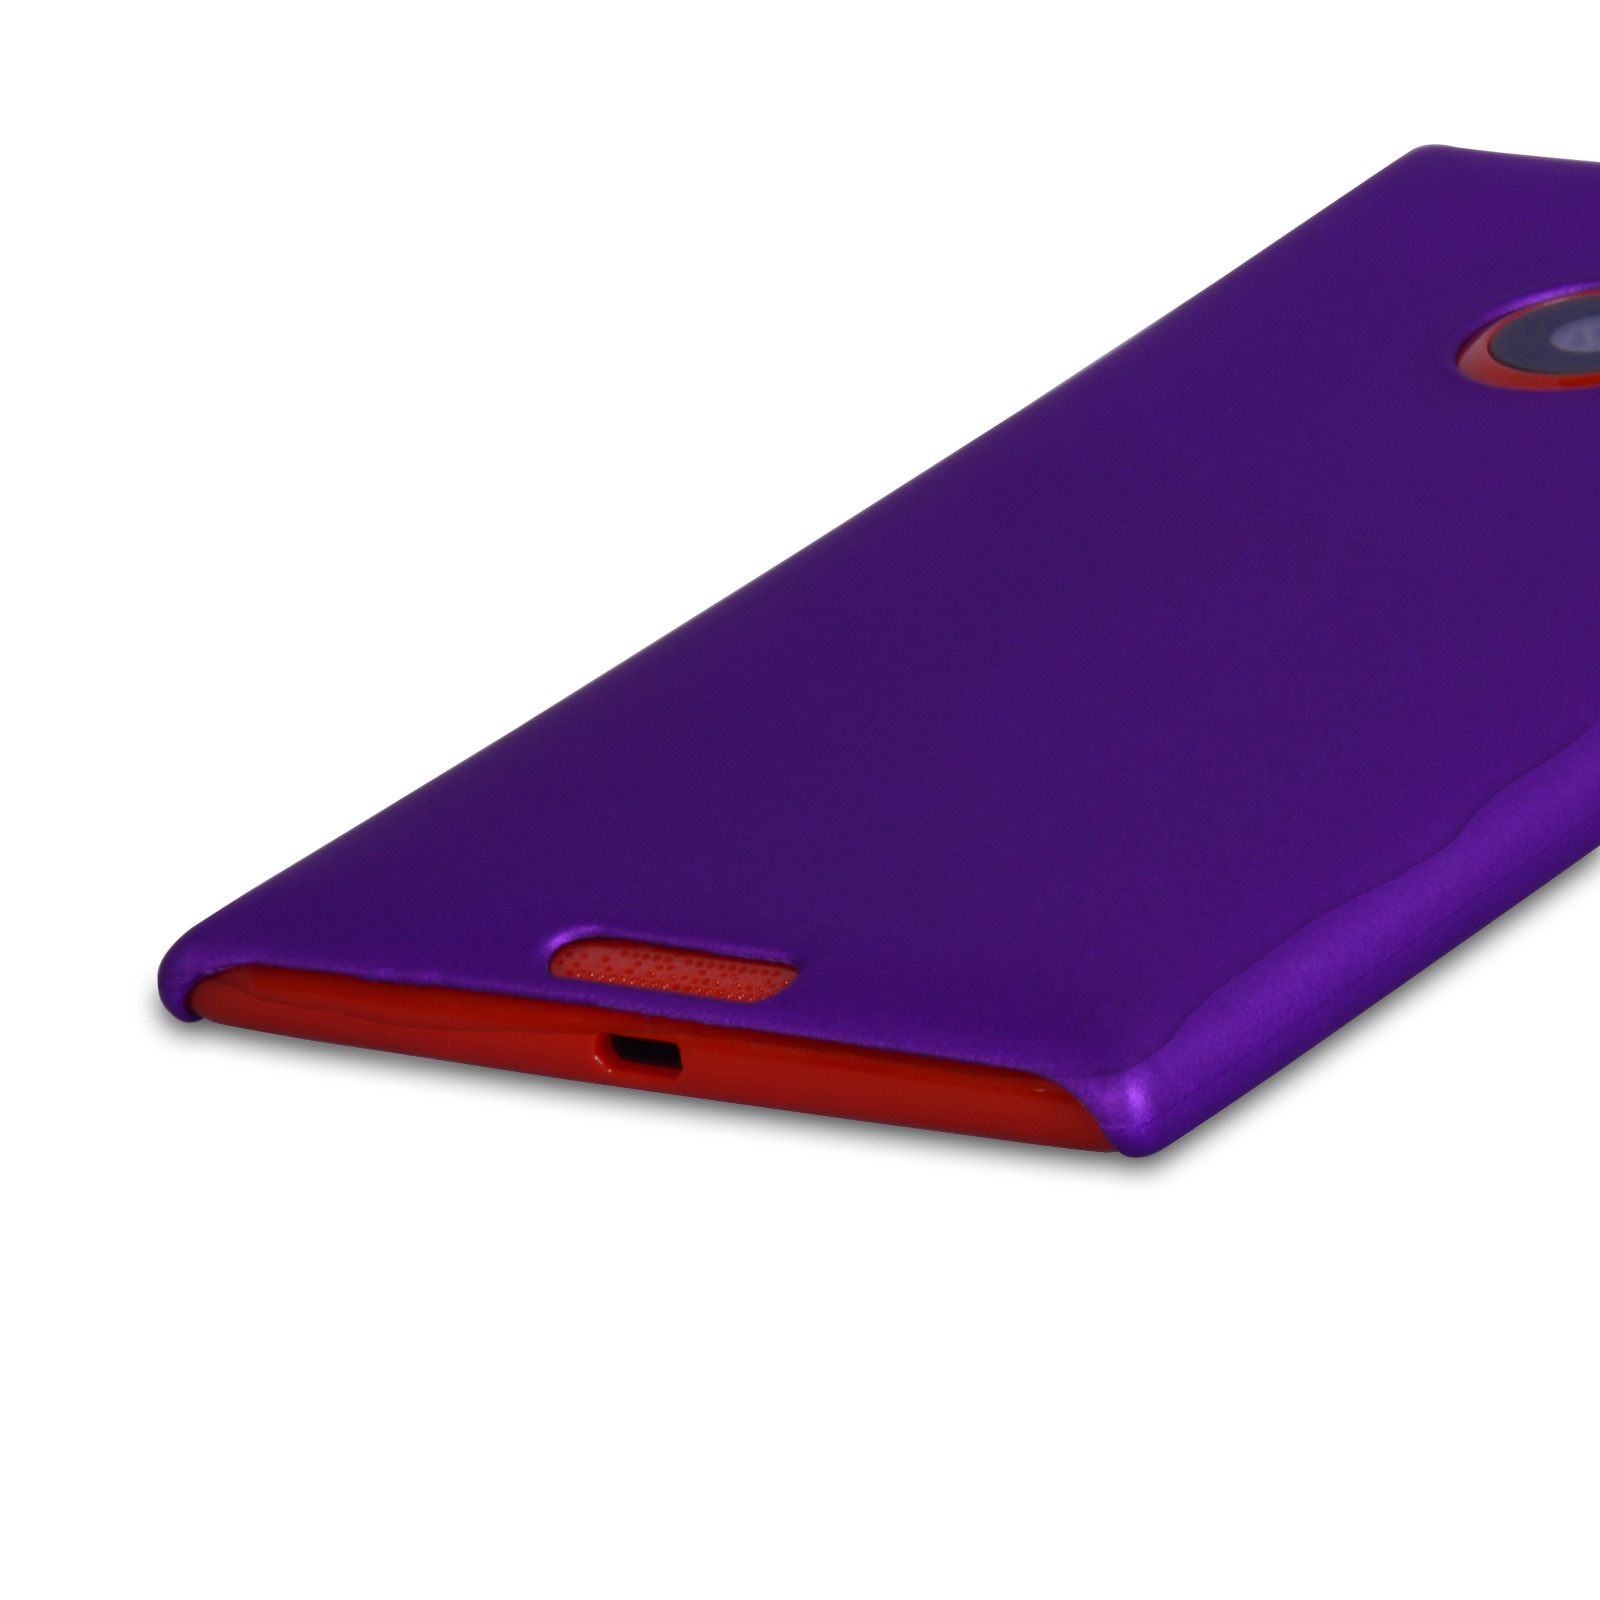 YouSave Accessories Nokia Lumia 1520 Hard Hybrid Case - Purple